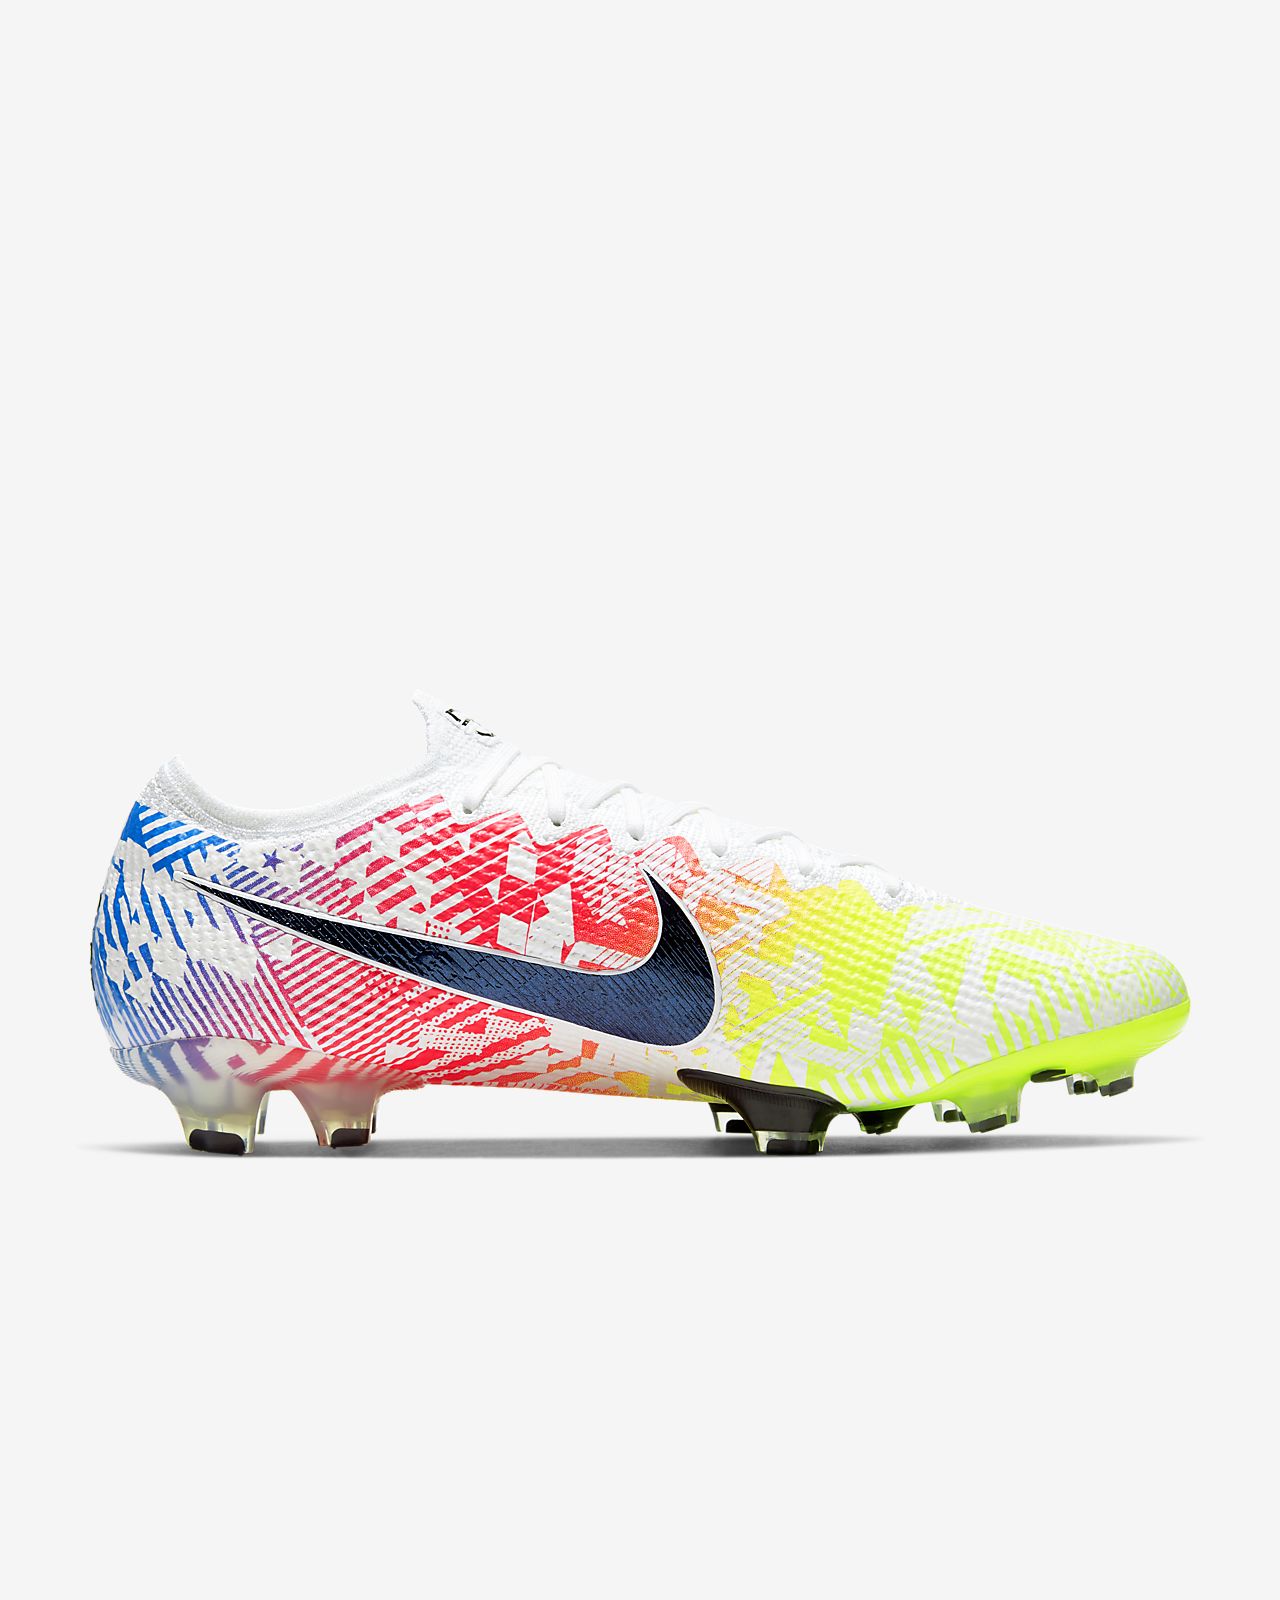 New Soccer Cleat Nike Hypervenom Phade II Neymar TF Blue .